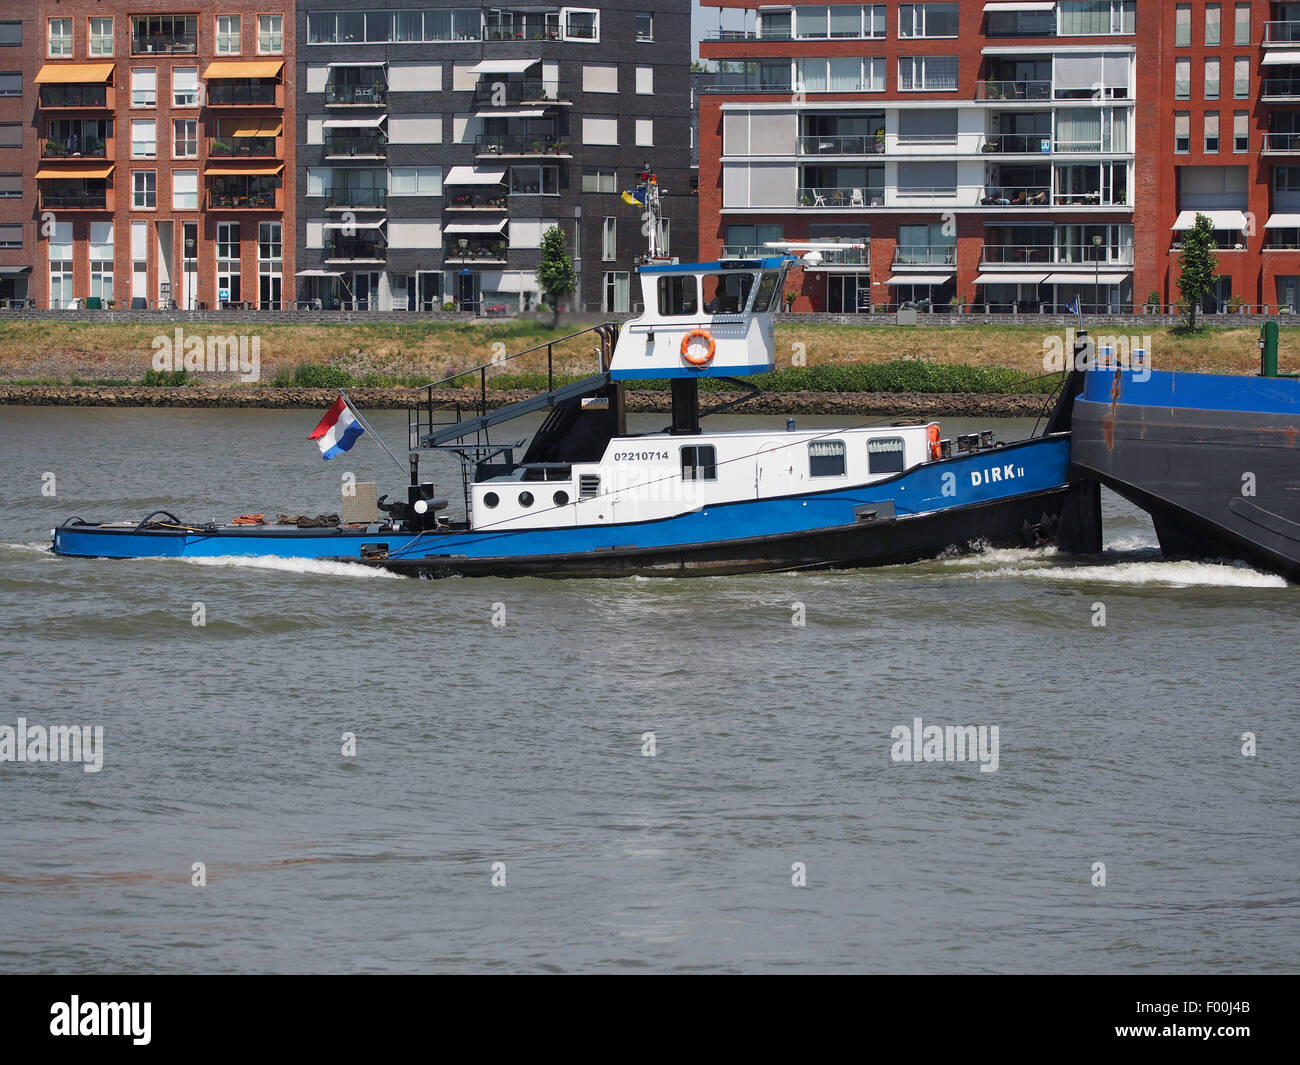 Dirk II - ENI 02210714 pushing B602 - Split Hopper Barge 600 m3 - Baars BV, pic3 Stock Photo